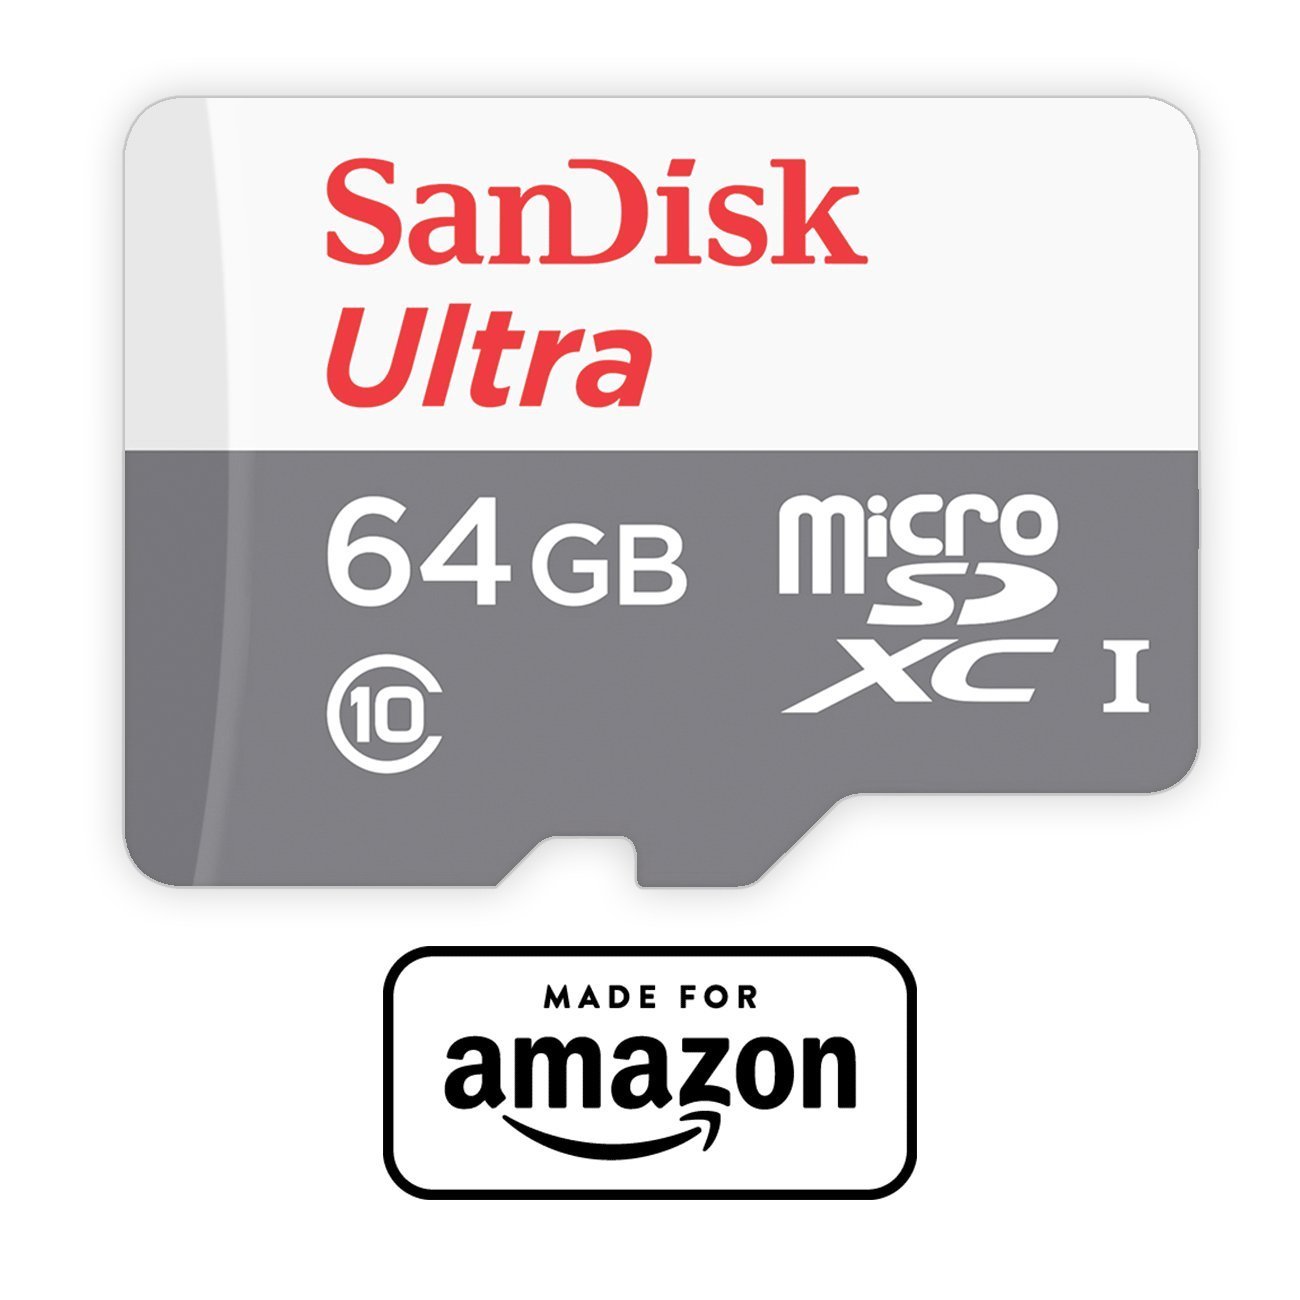 Стоимость микро. SANDISK 32gb. SANDISK 32 GB MICROSD. Карта памяти SANDISK Ultra MICROSDHC 32 ГБ. SANDISK MICROSD 32 GB UHS-I class 10.